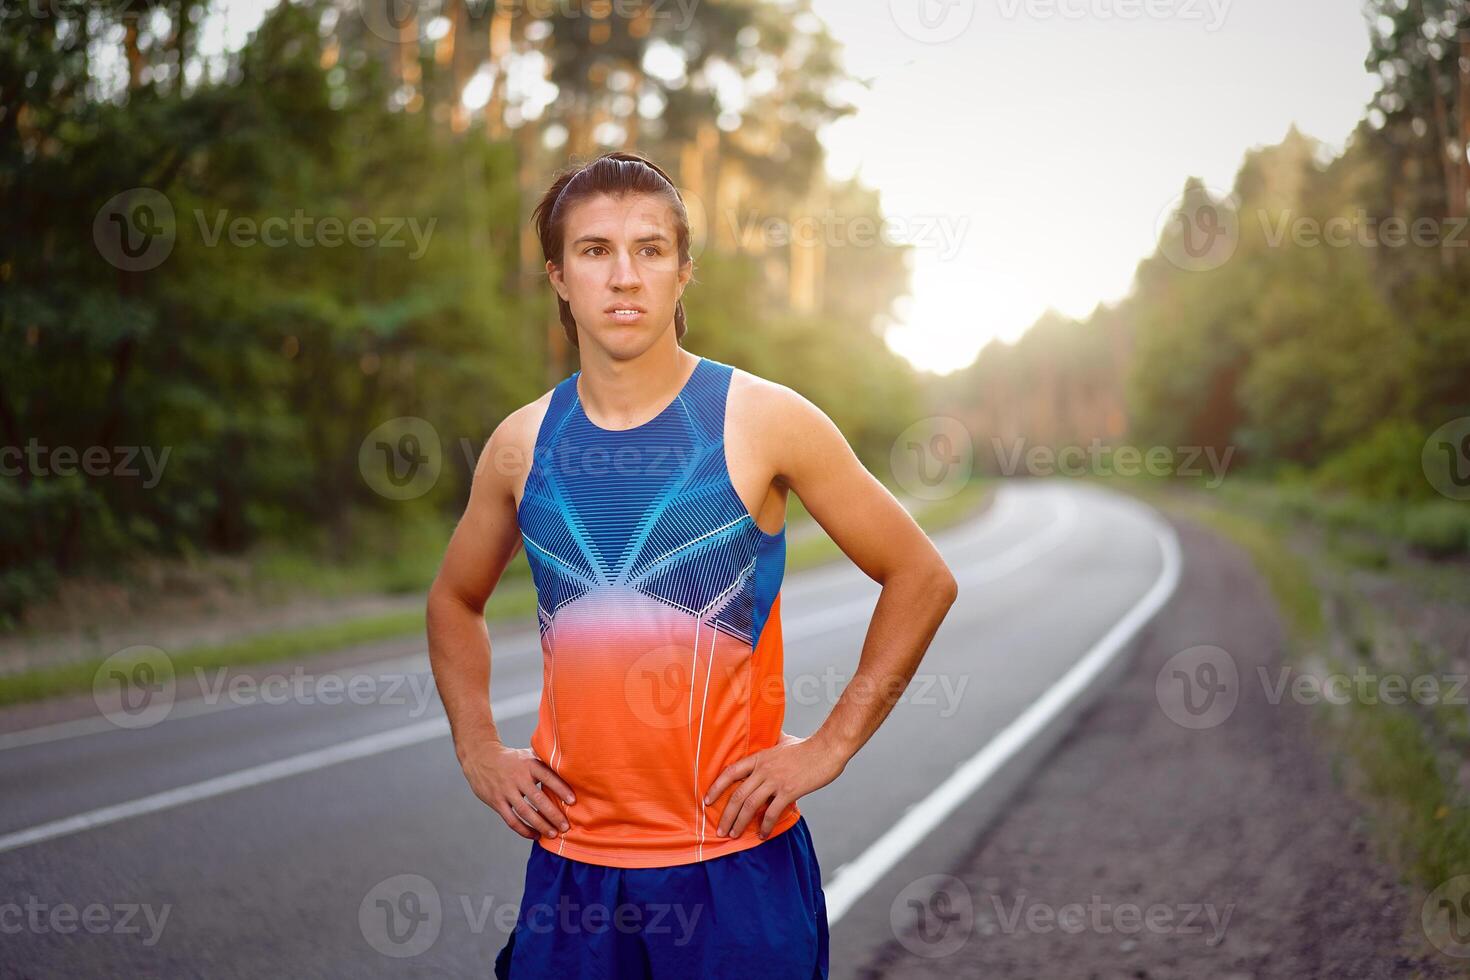 joven Rizado rubia caucásico hombre en pie en asfalto bosque la carretera mirando a cámara antes de correr. foto